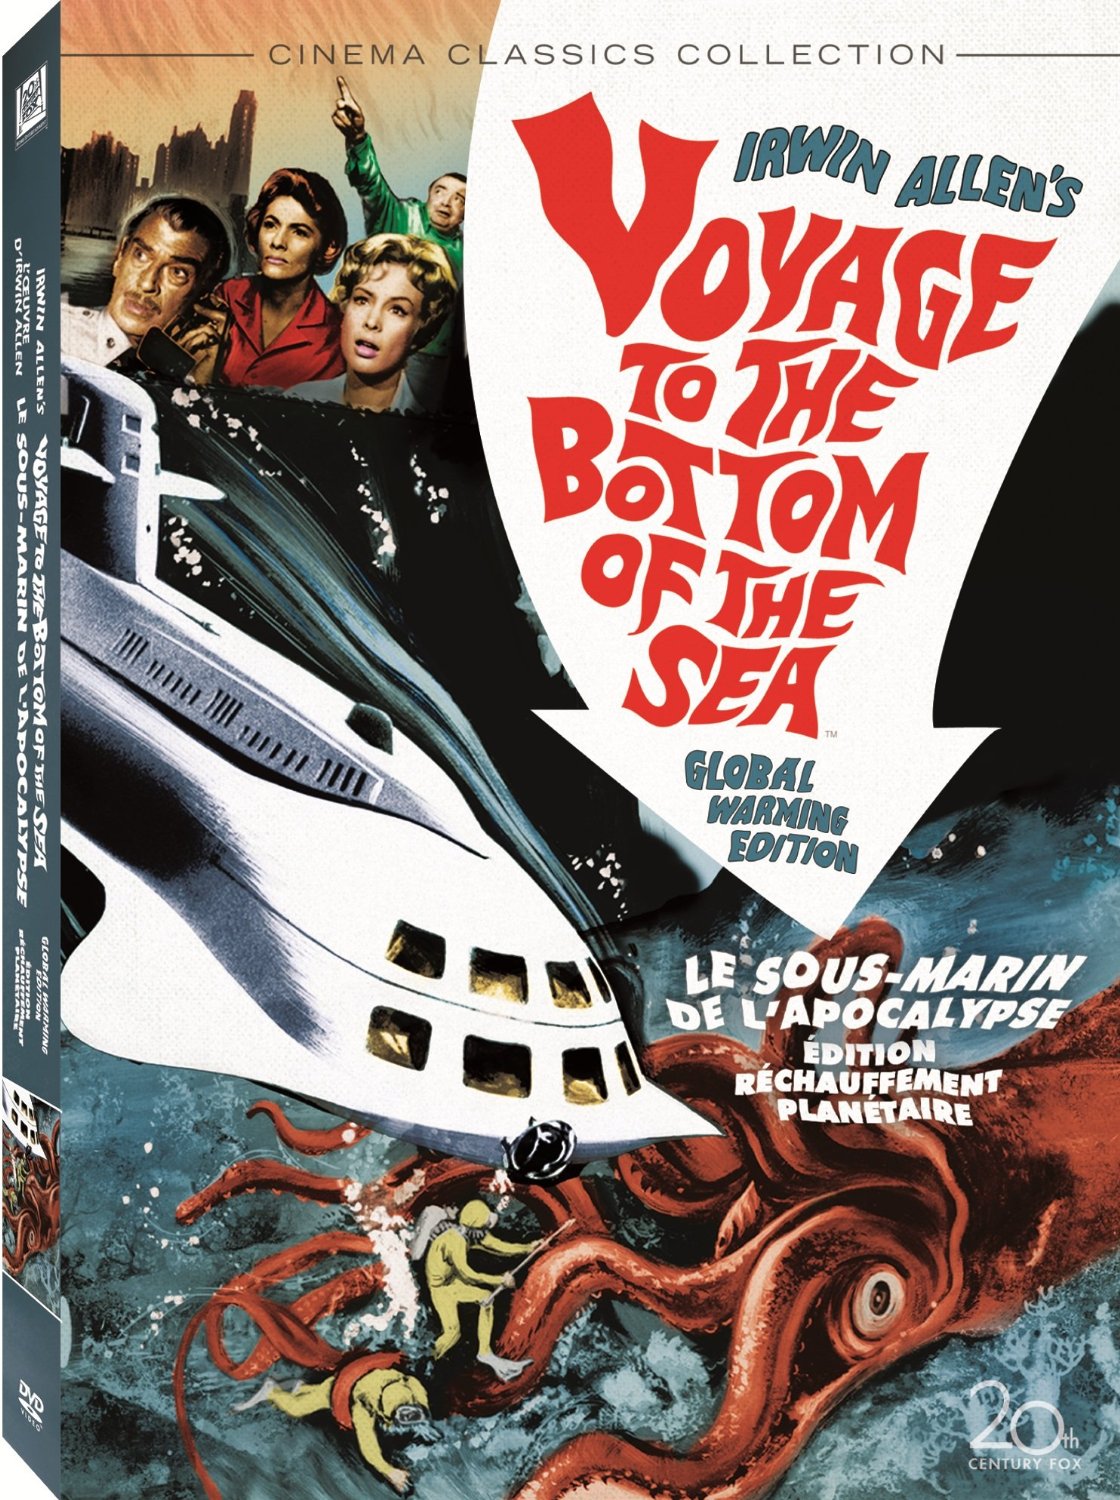 Voyage to the Bottom of the Sea, starring Walter Pidgeon, Peter Lorre, Joan Fontaine, Barbara Eden, Michael Ansarra